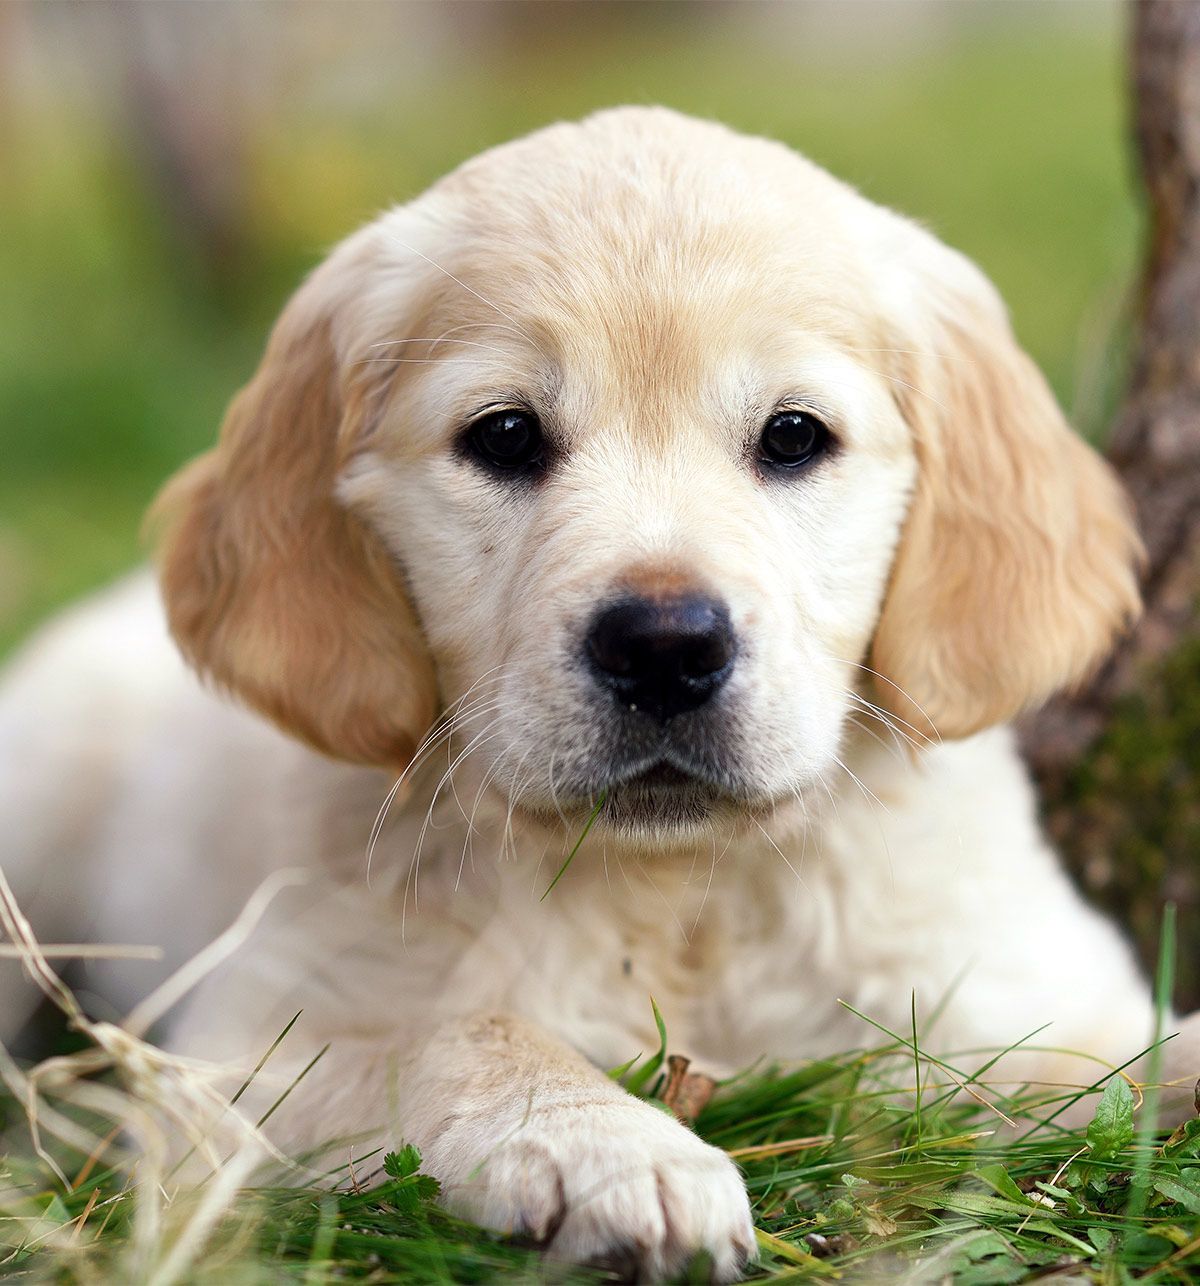 Puppy Pictures of Golden Retrievers #goldenretriever